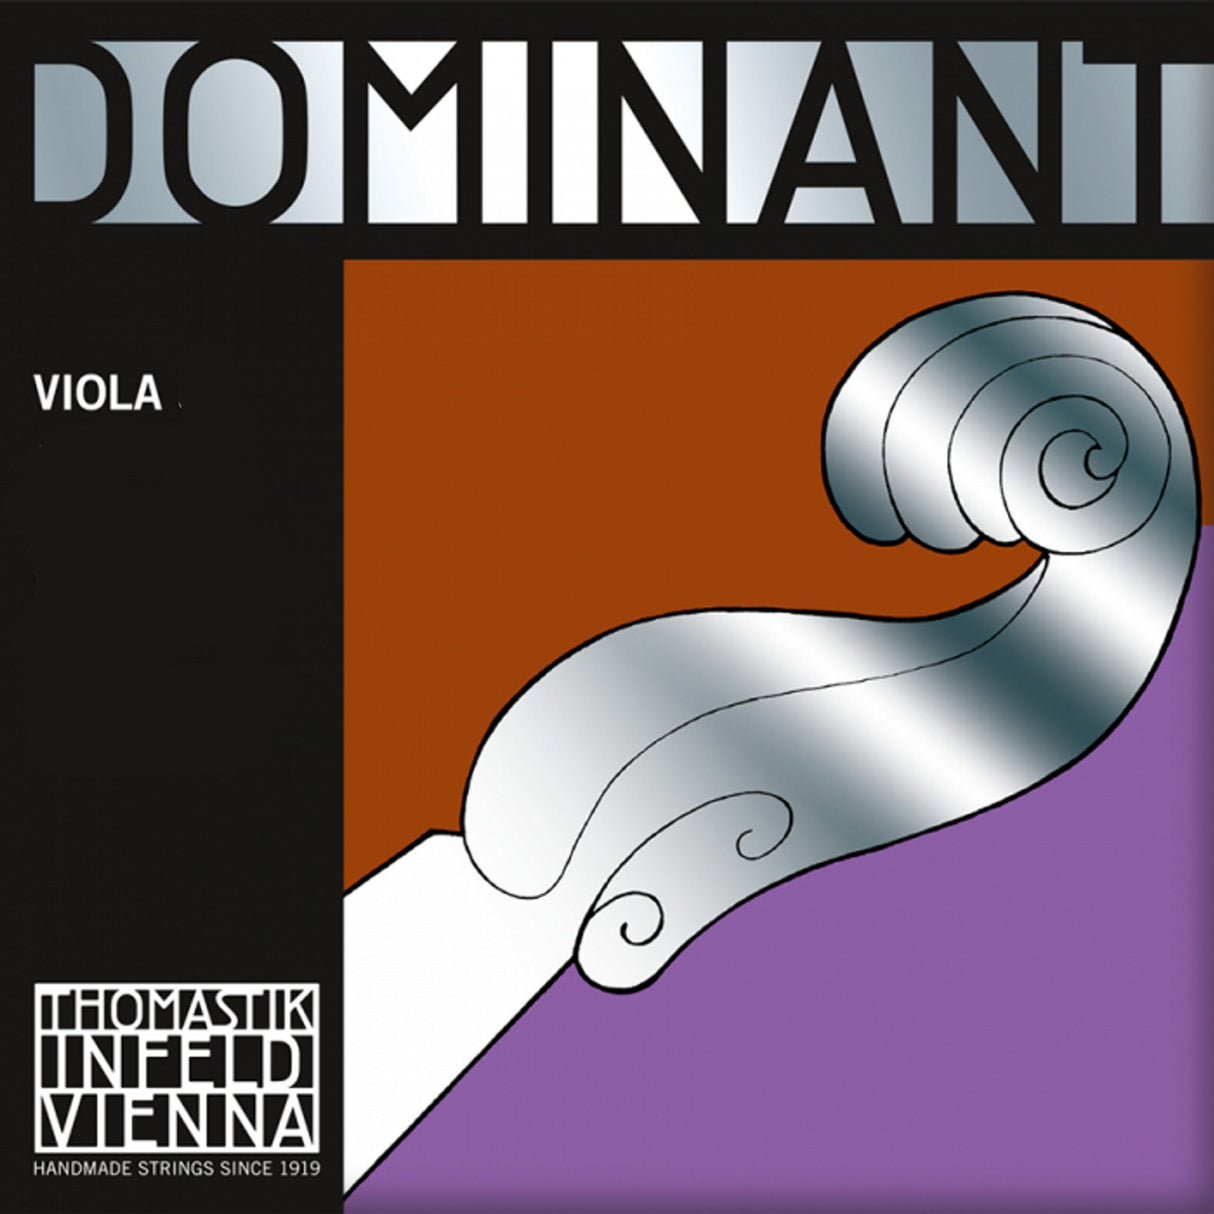 Thomastik-Infeld 137T Dominant Viola D Strings, Tube of 12, 14.5 - 15 Inch